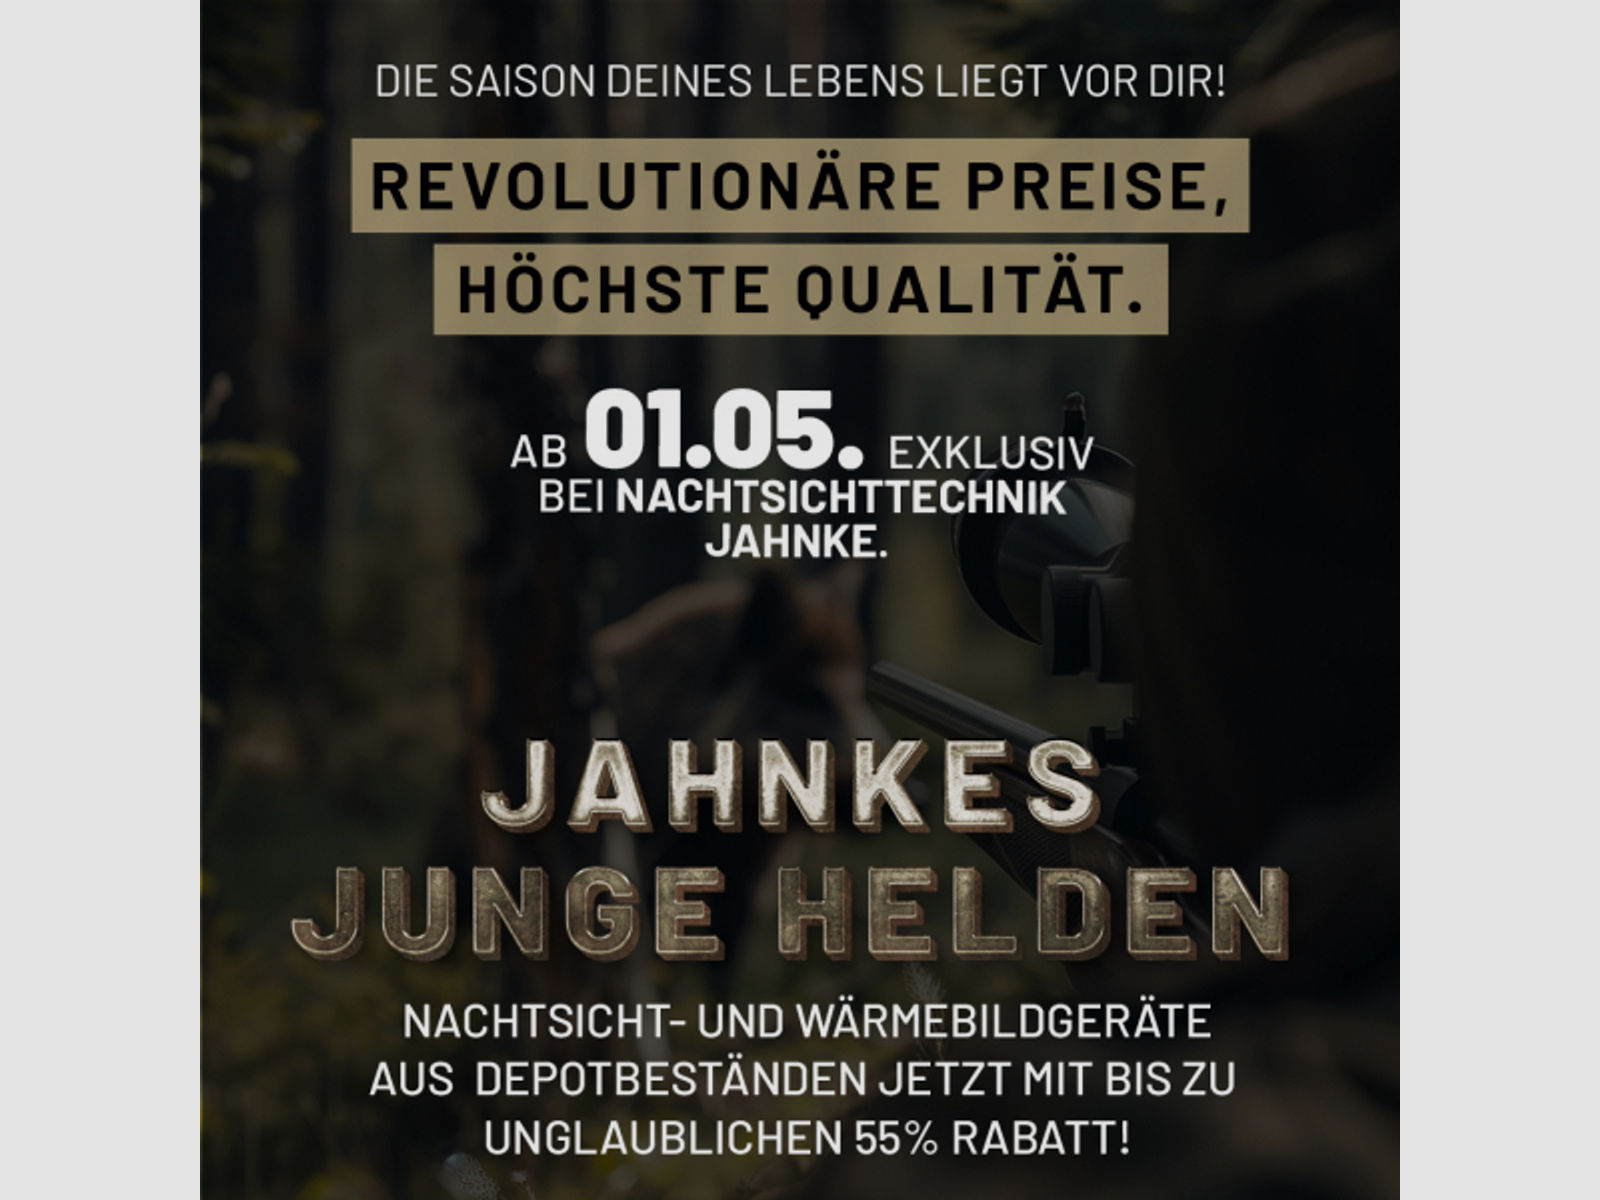 Nachtsichttechnik Jahnke DJ-8 5x58 JJH LK 3 S 2, Jahnke Monochrom (Grau)